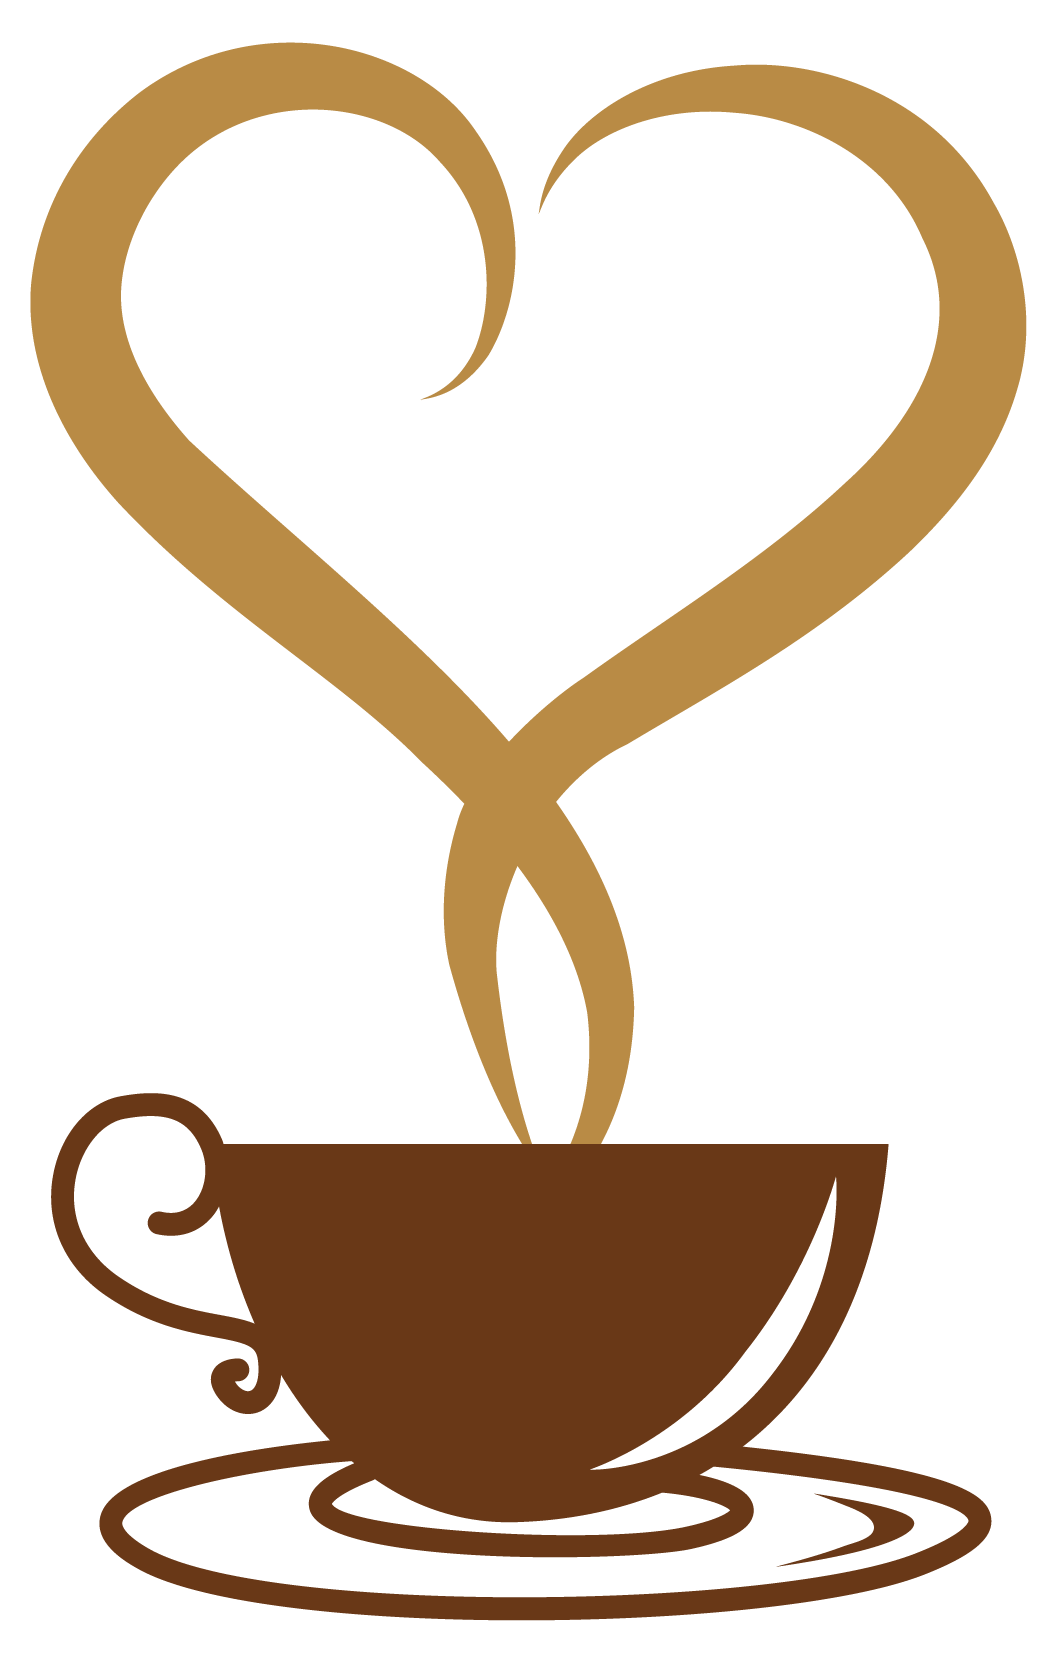 Coffee Mug With Heart PNG - 79511